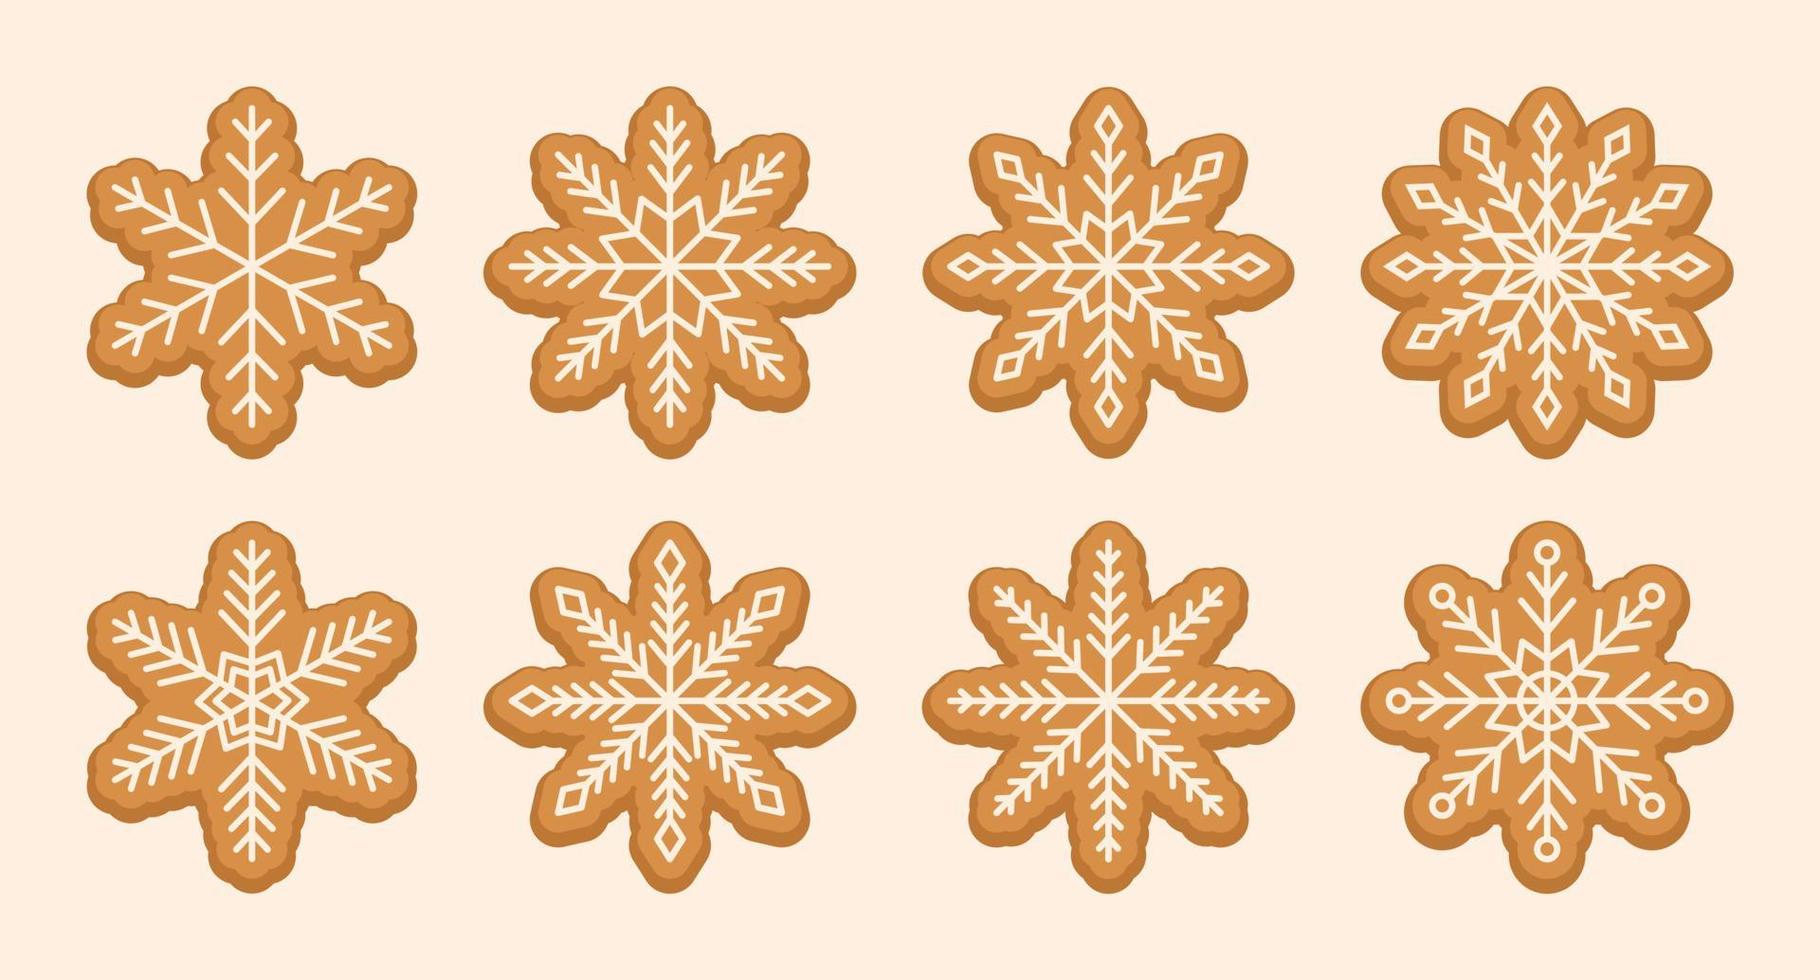 simples galletas dulces de copo de nieve de pan de jengibre con azúcar glaseado. comida navideña. vector